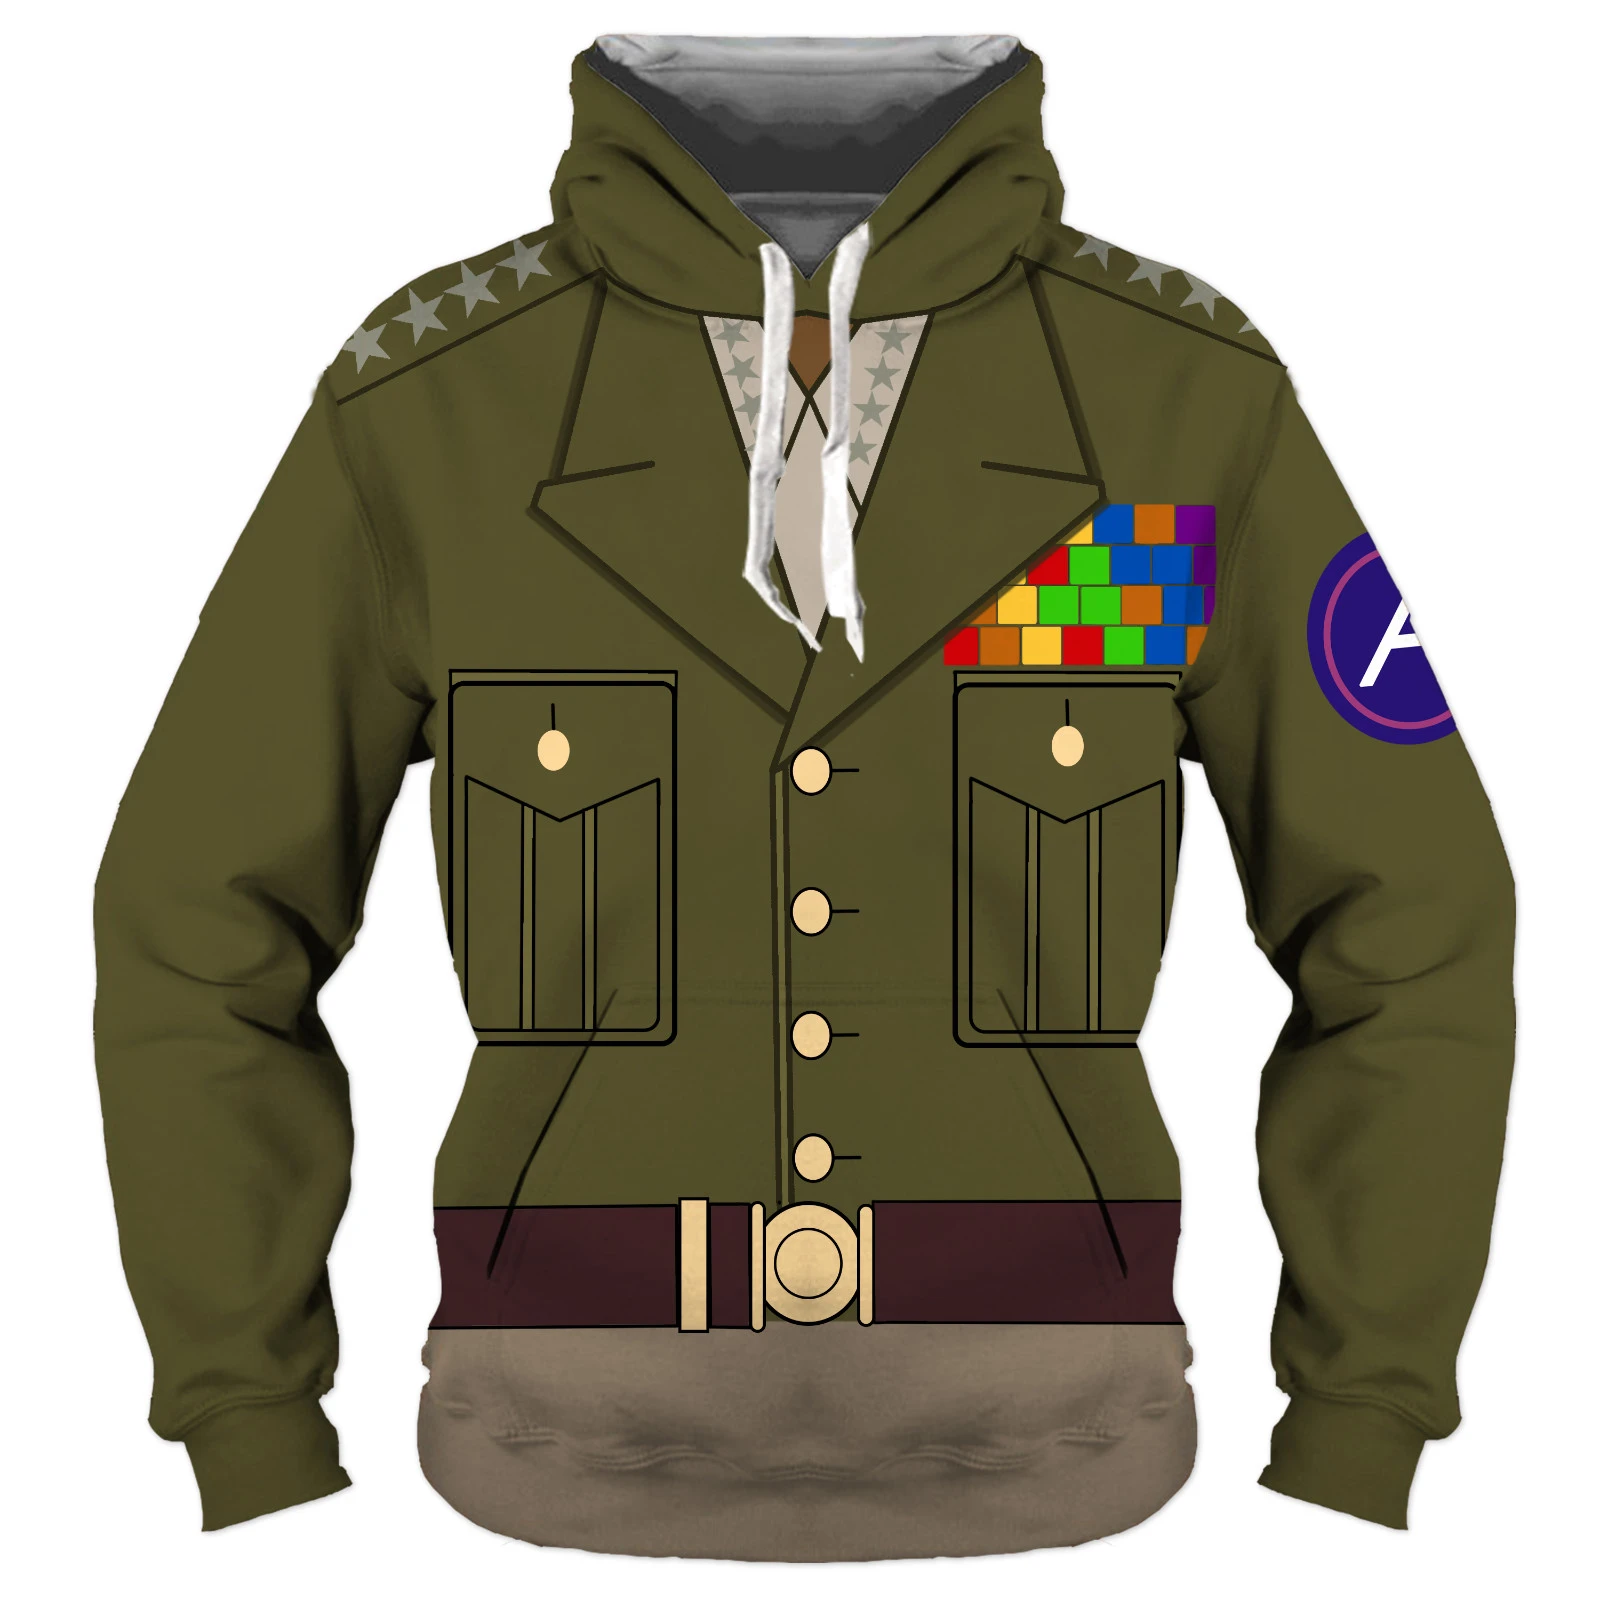 Retro Military Uniform 3D Printed Hoodies Unisex Harajuku Fashion Casual Streetwear Hooded Sweatshirt